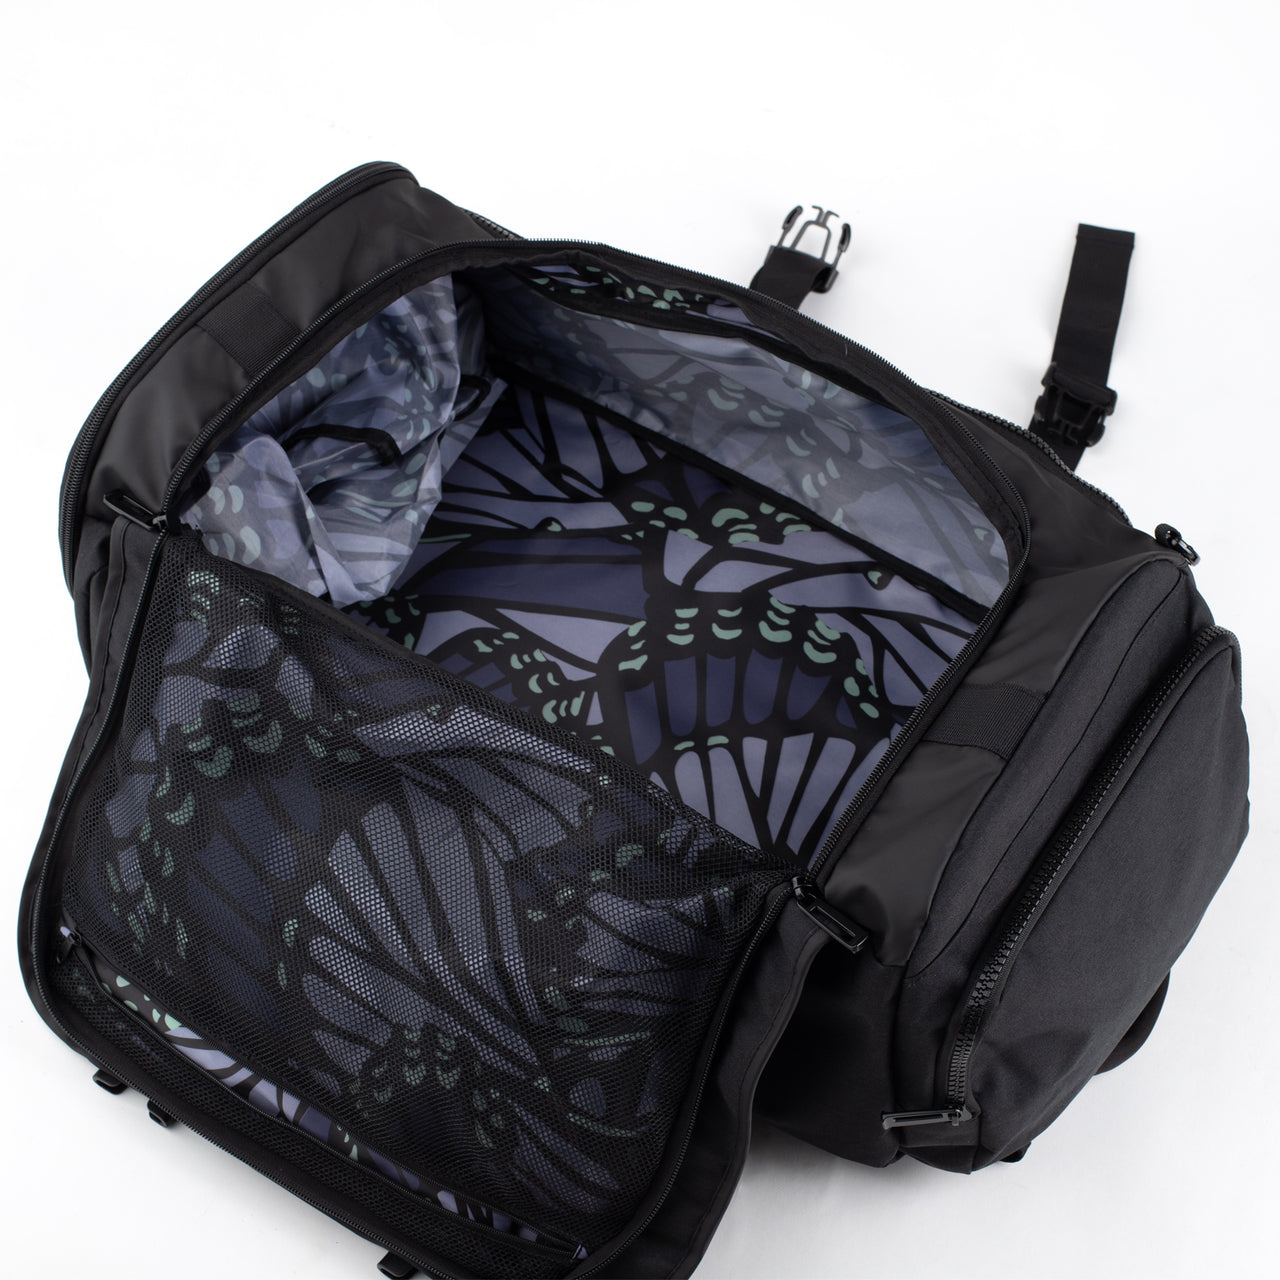 93brand "Butterfly" Gear Bag